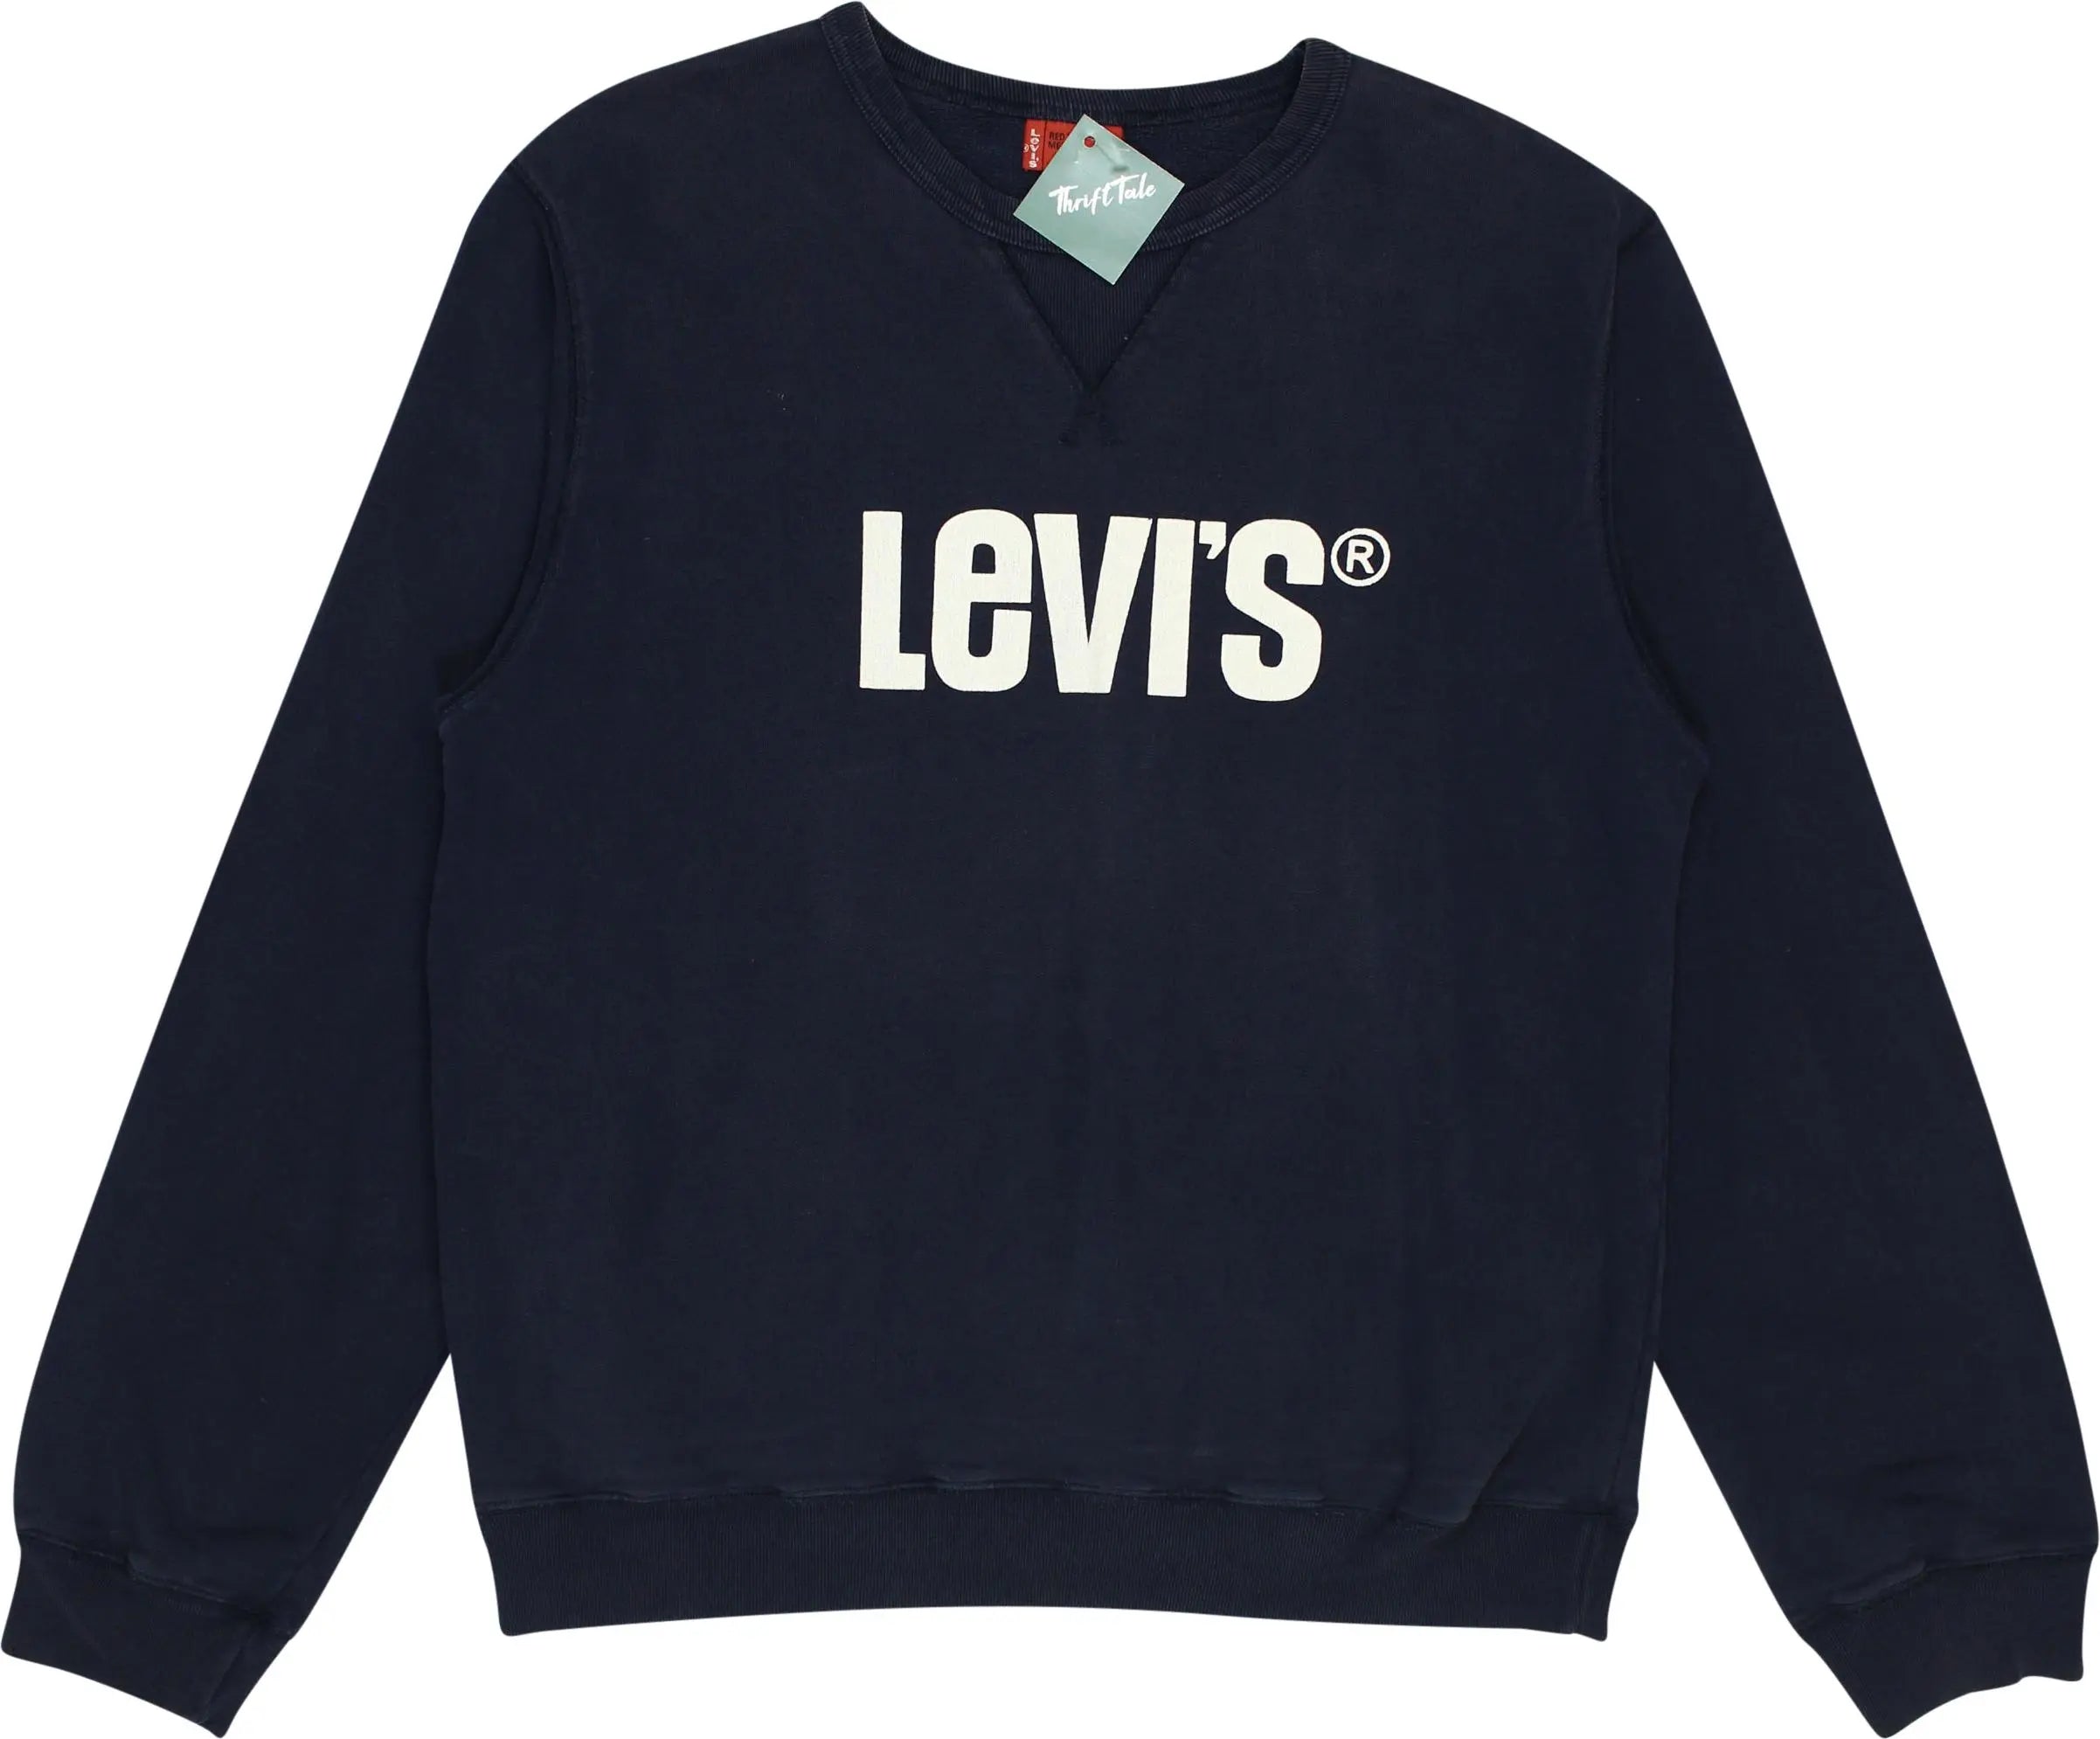 Levi's - Vintage Levi's Red Tab Big Logo Sweatshirt Jumper- ThriftTale.com - Vintage and second handclothing